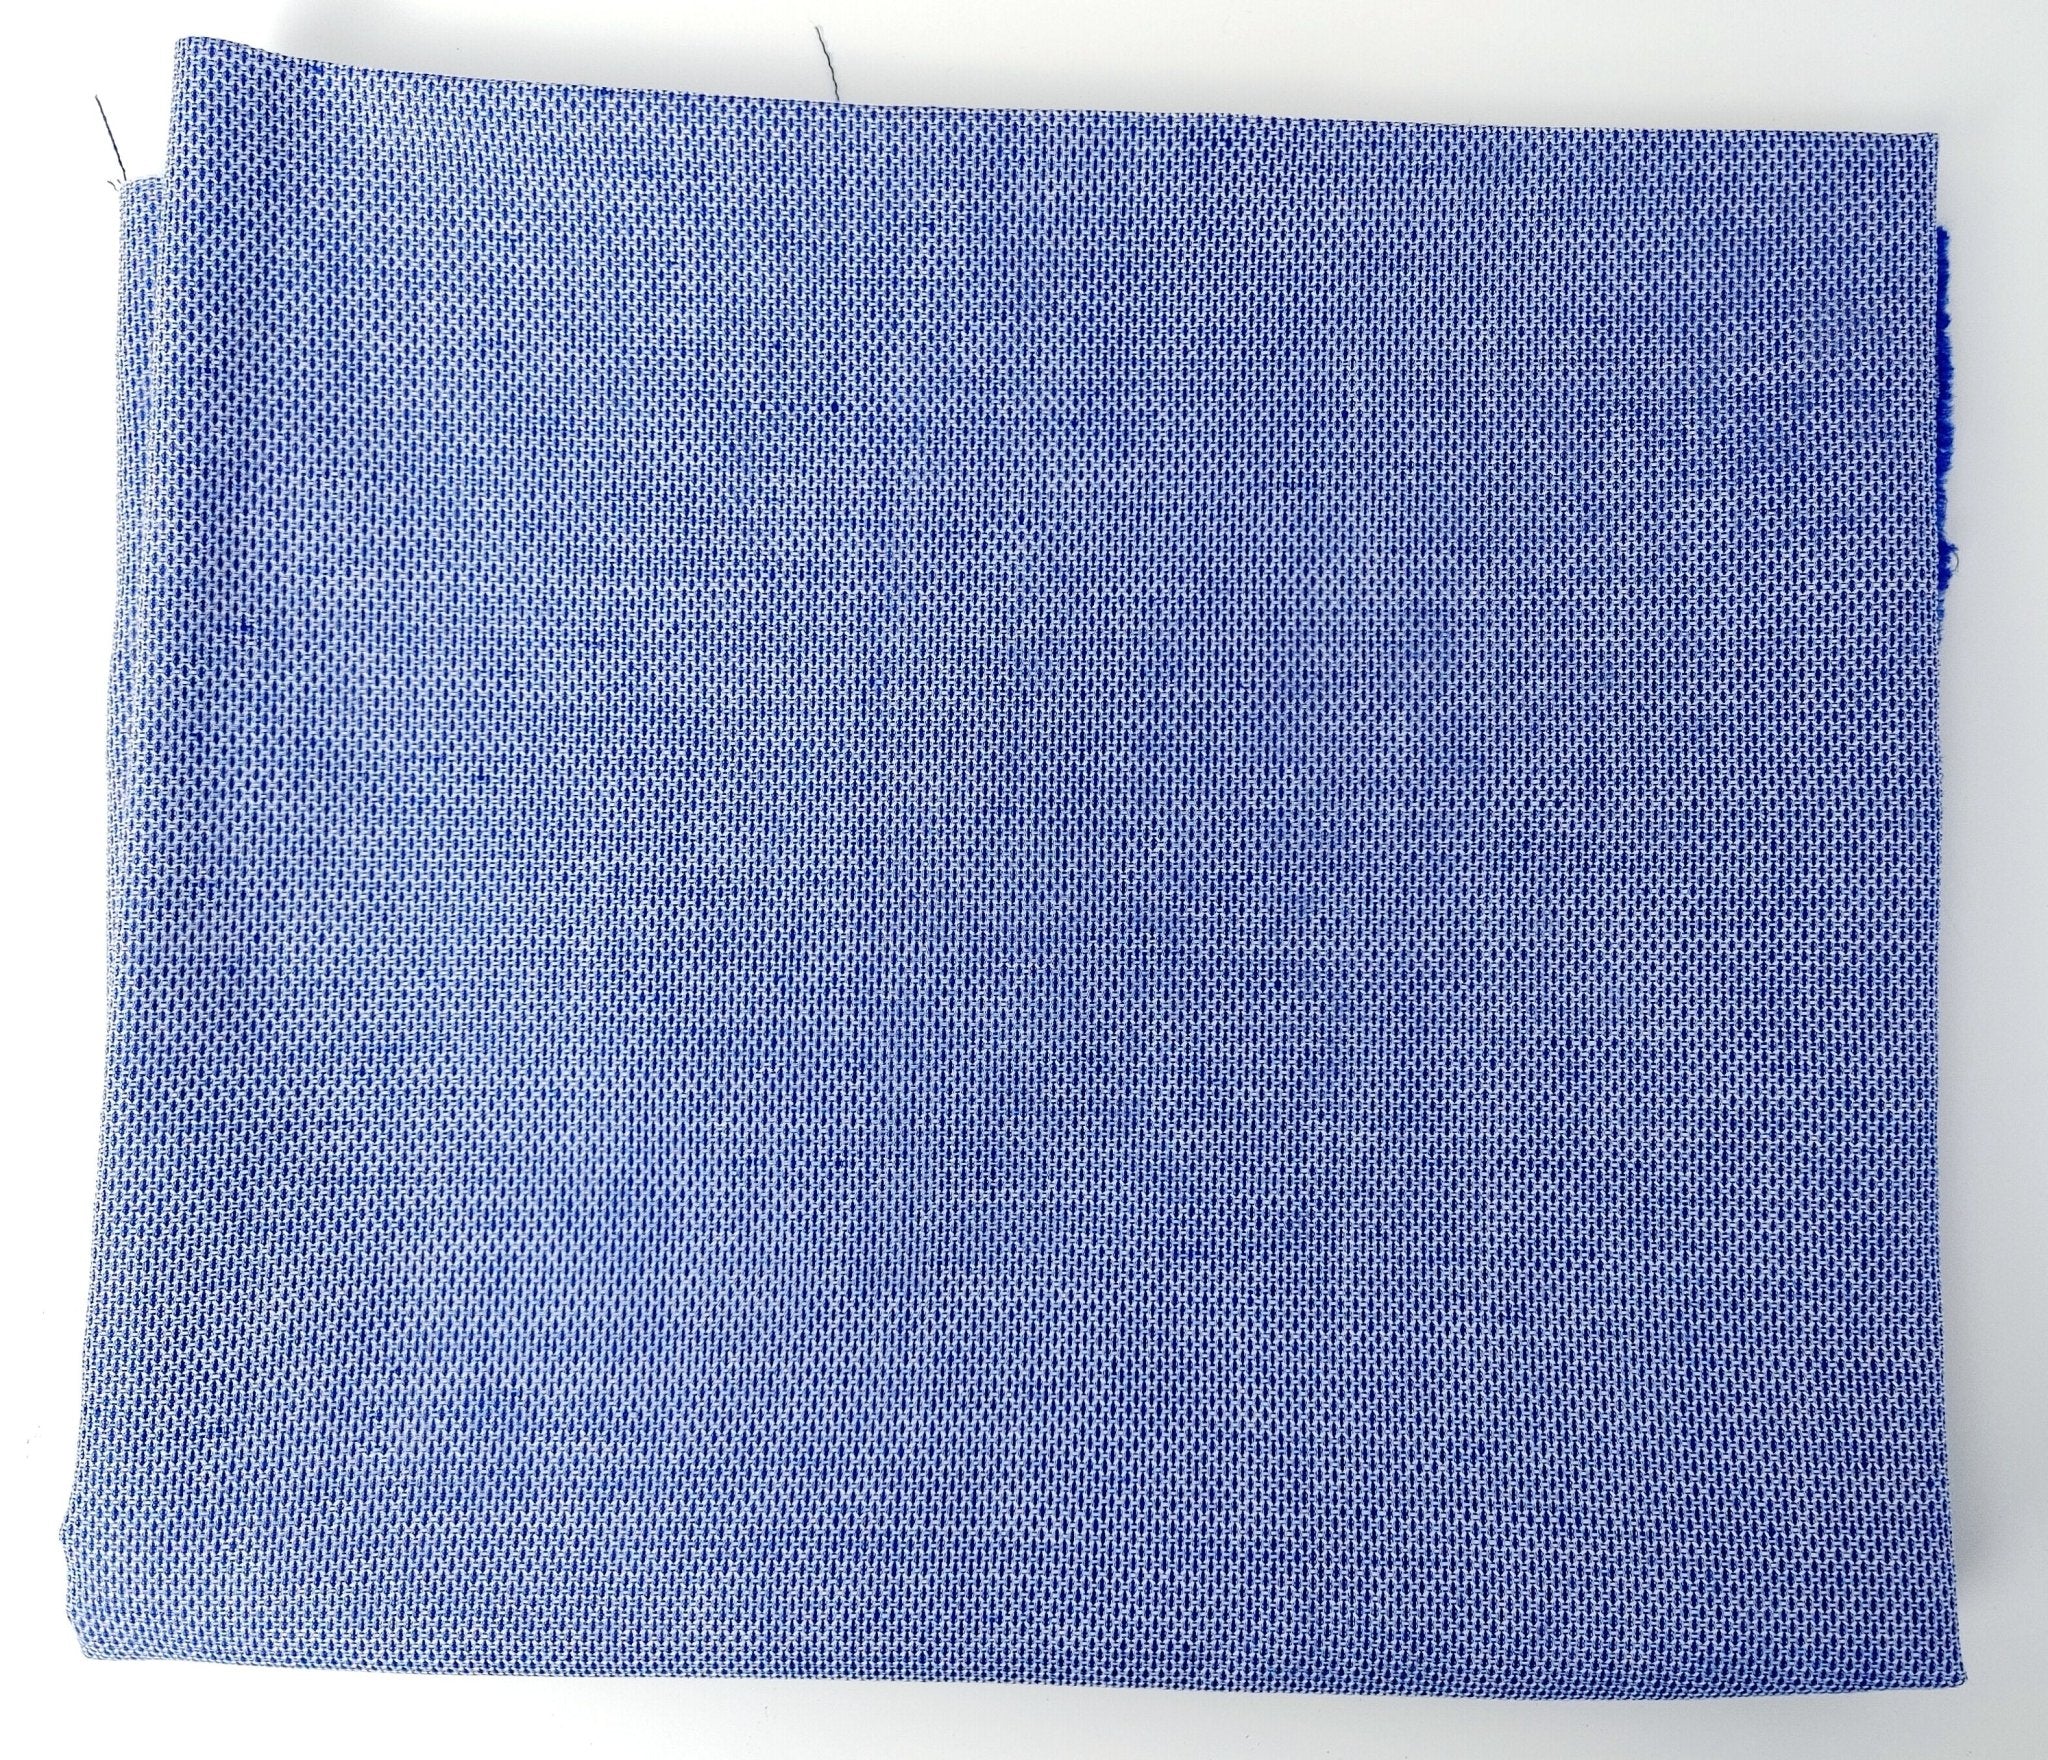 Linen Cotton Rhombus Shape Fabric - Special V-Heald 4350 4349 4348 4347 - The Linen Lab - Blue